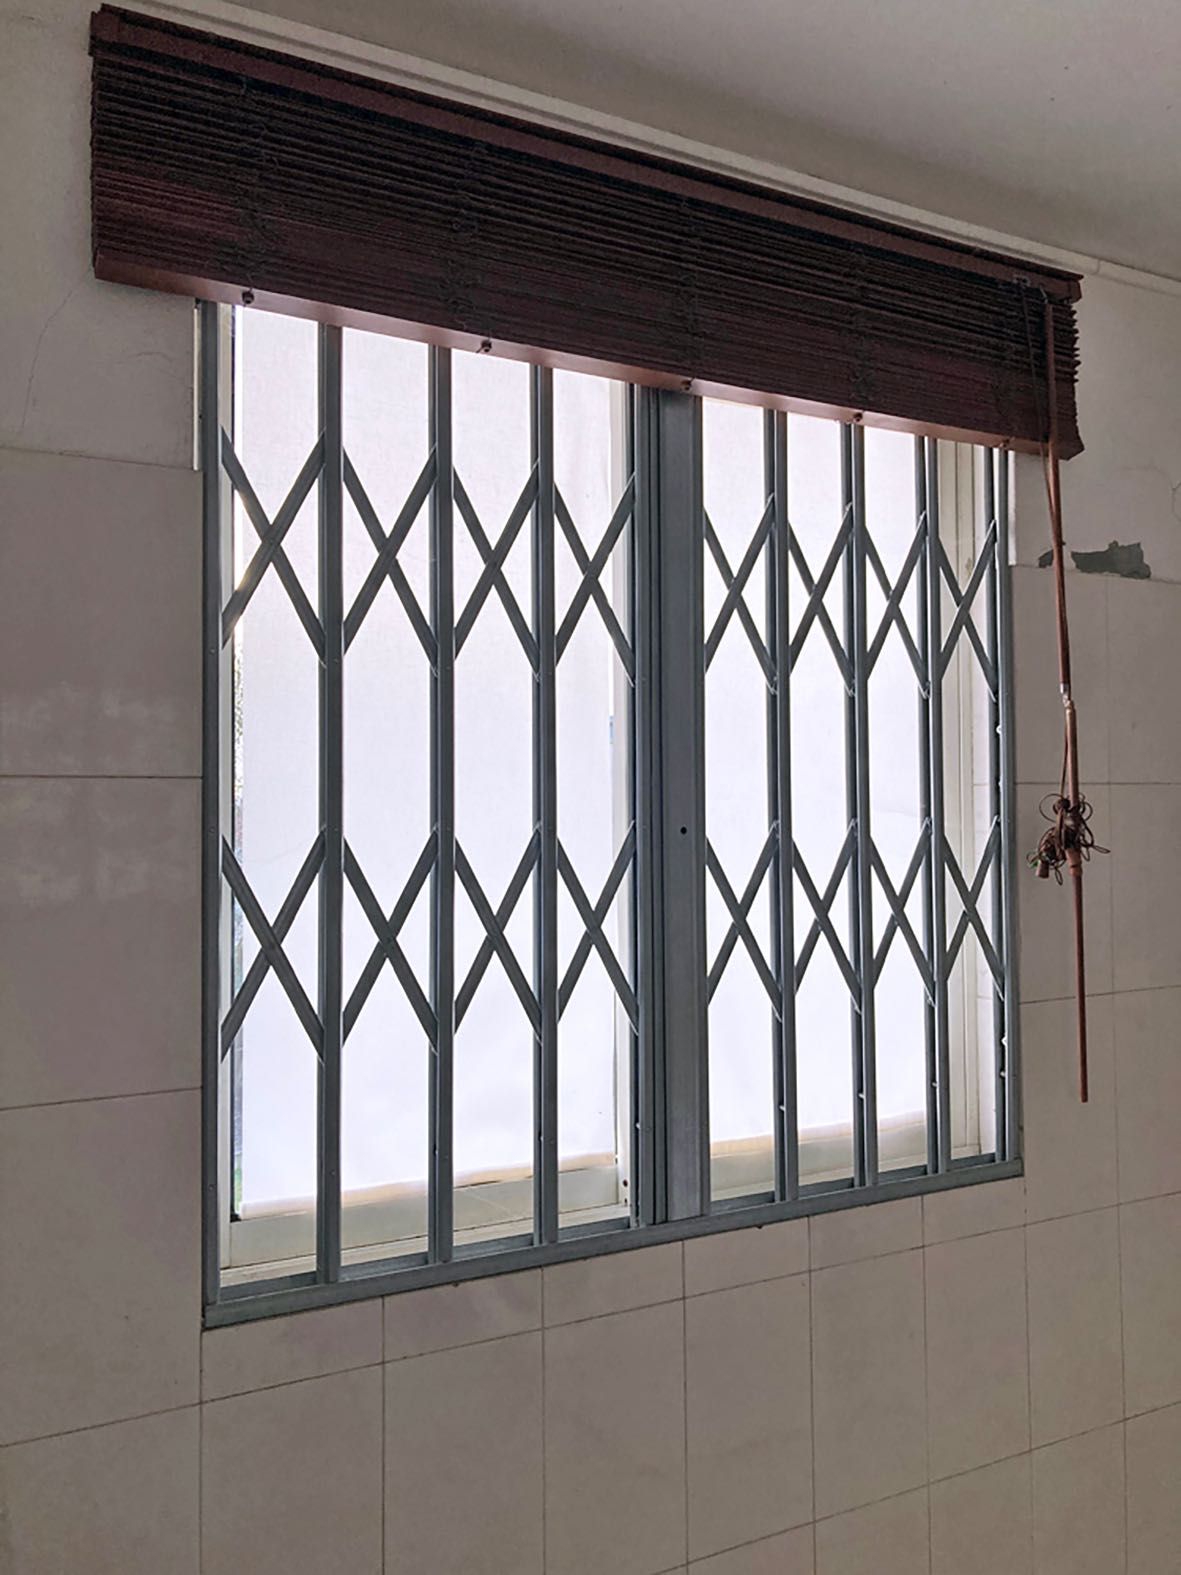 Grades de segurança lagarta zincadas - janela